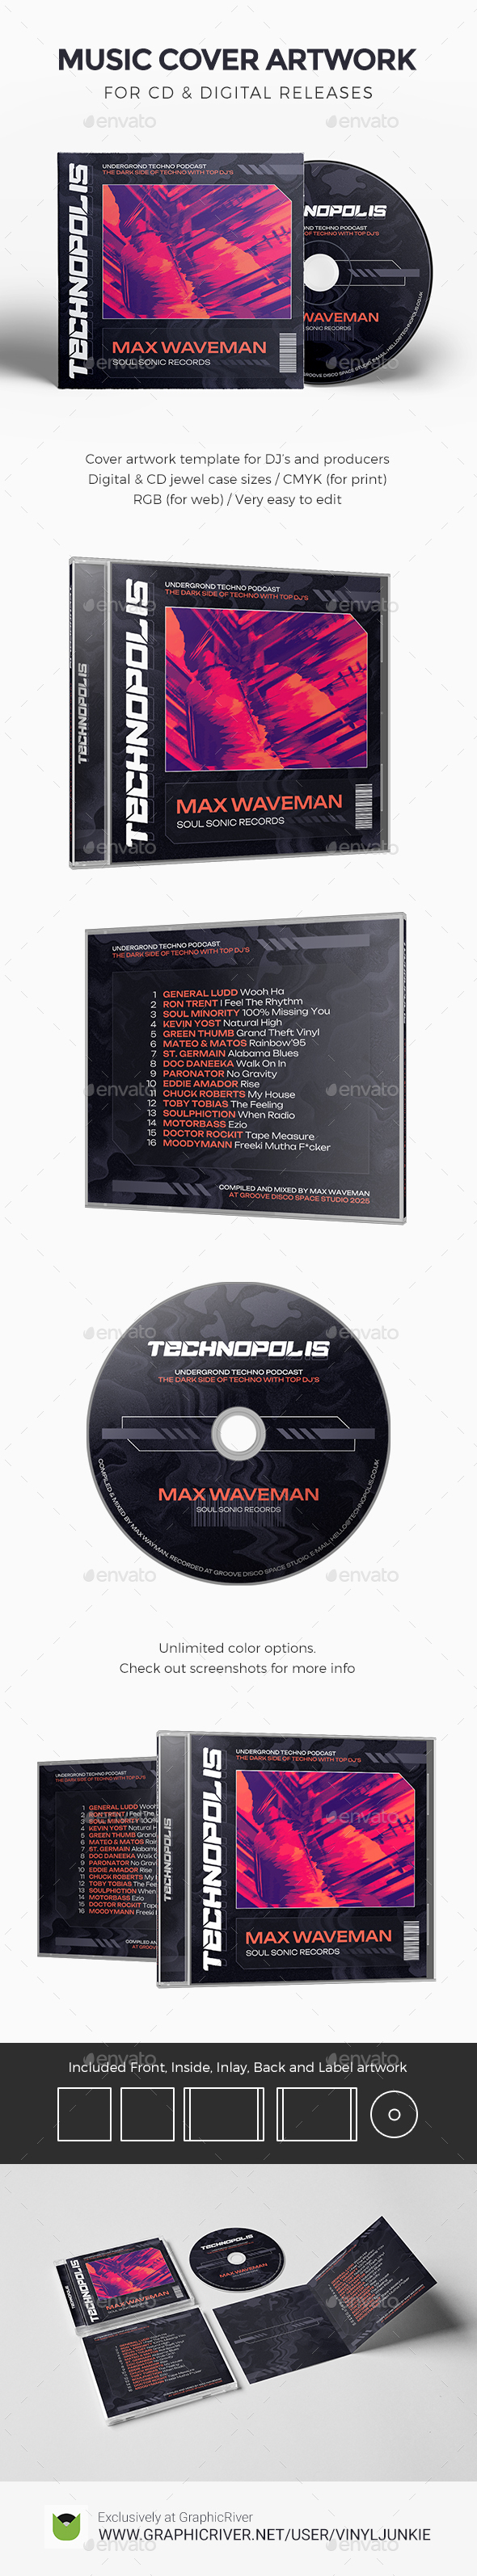 DJ Music Cover Artwork Template for CD / Digital Releases